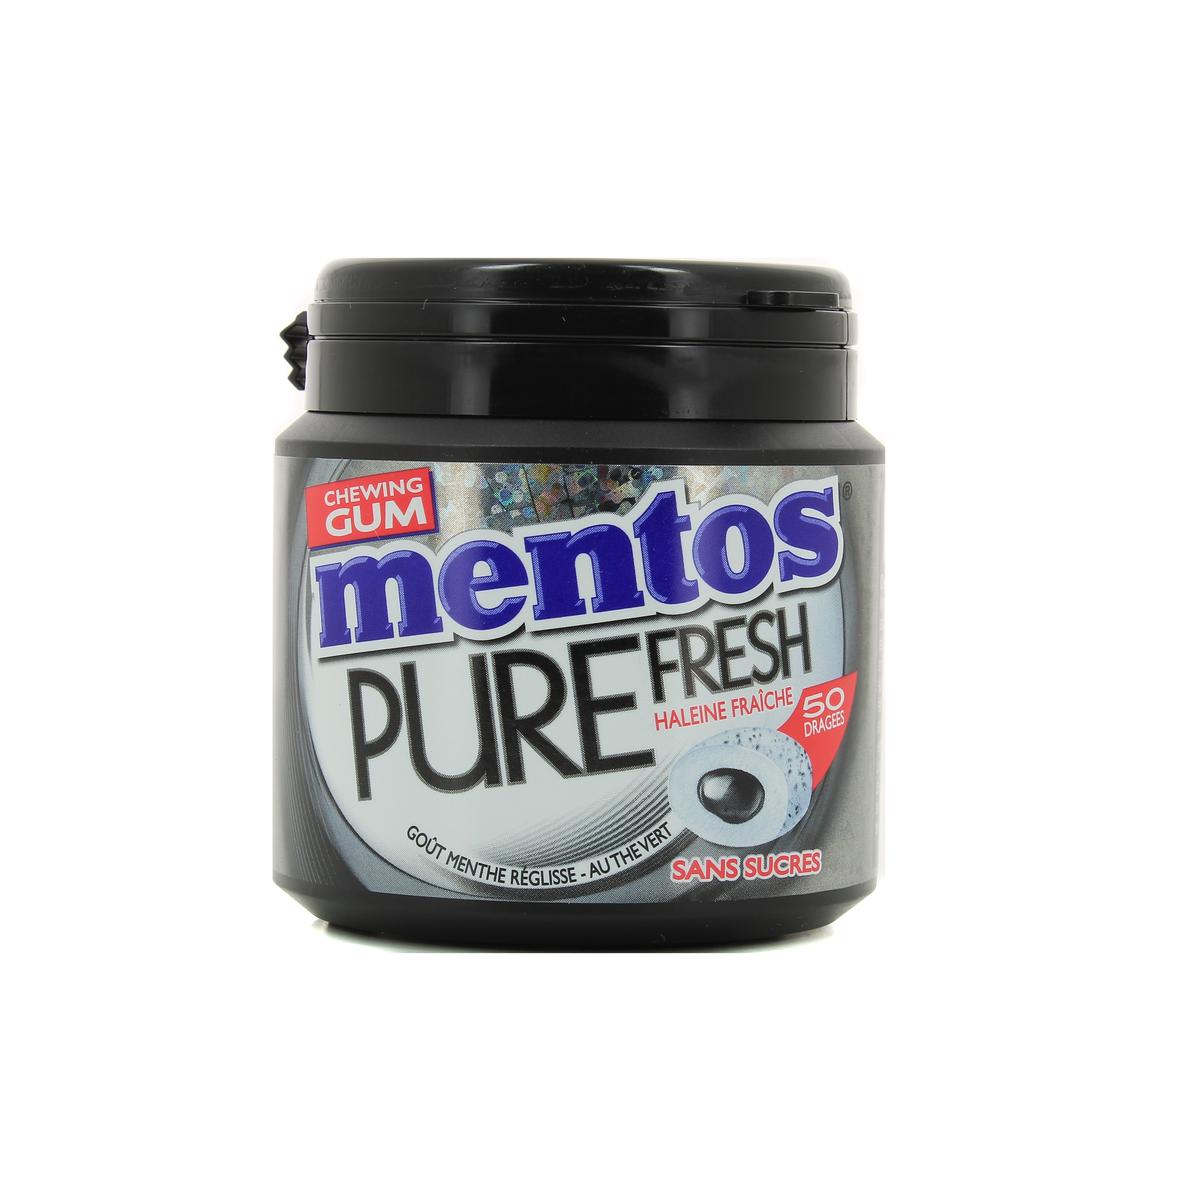 Acheter Mentos Chewing-gum pure fresh chlorophylle sans sucres, 100g